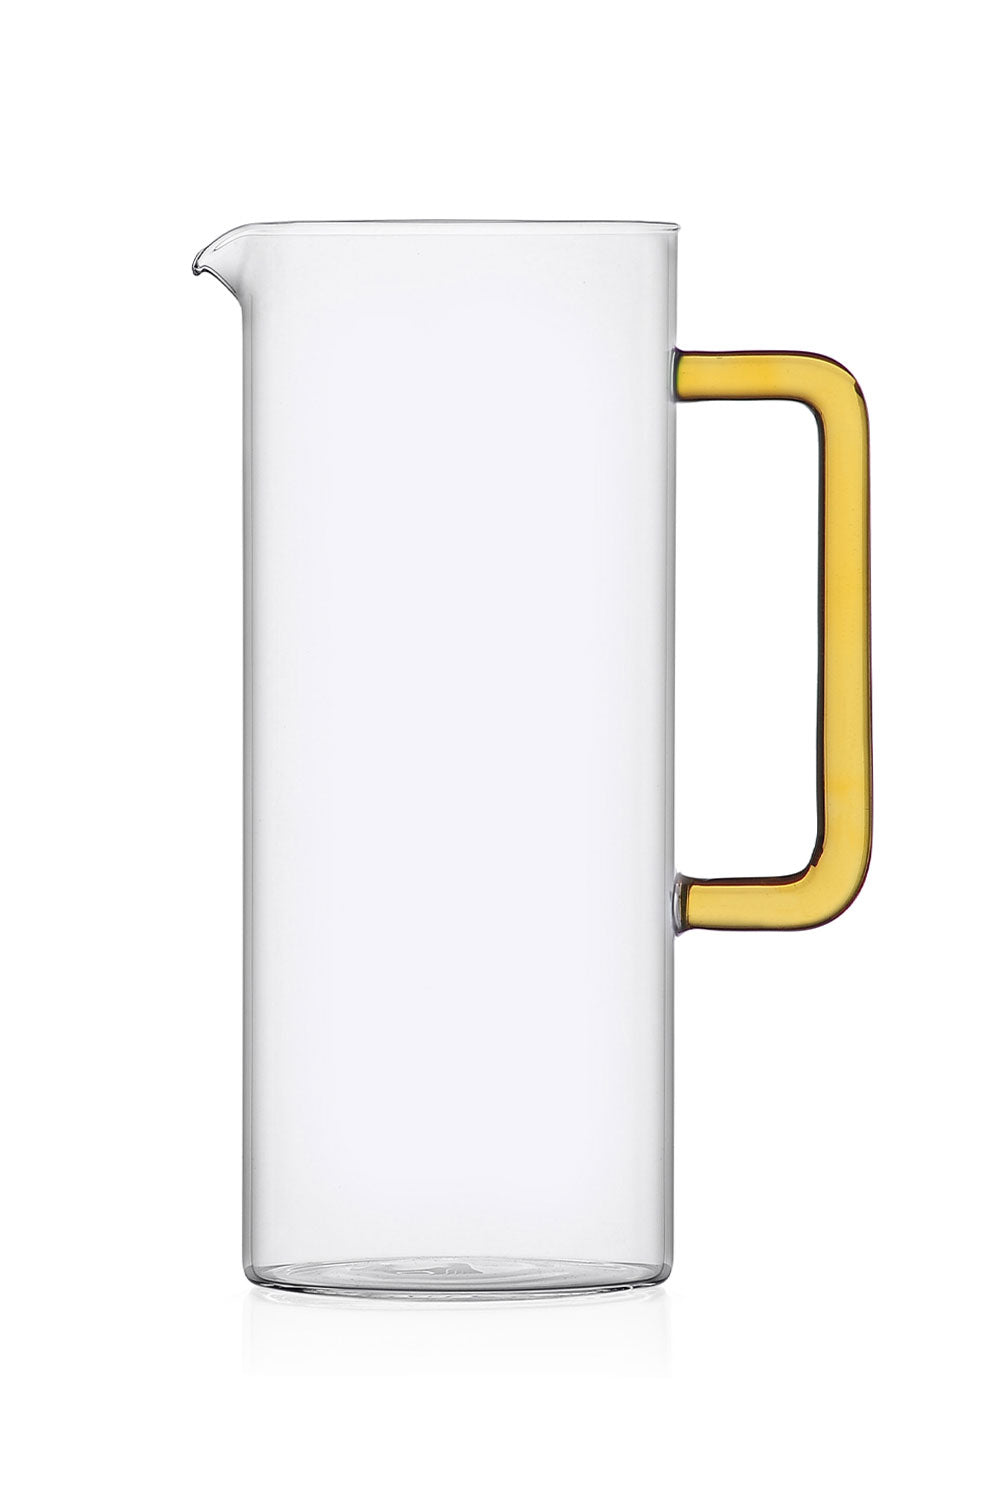 Tube Jug with Yellow Handle, 1.2 L